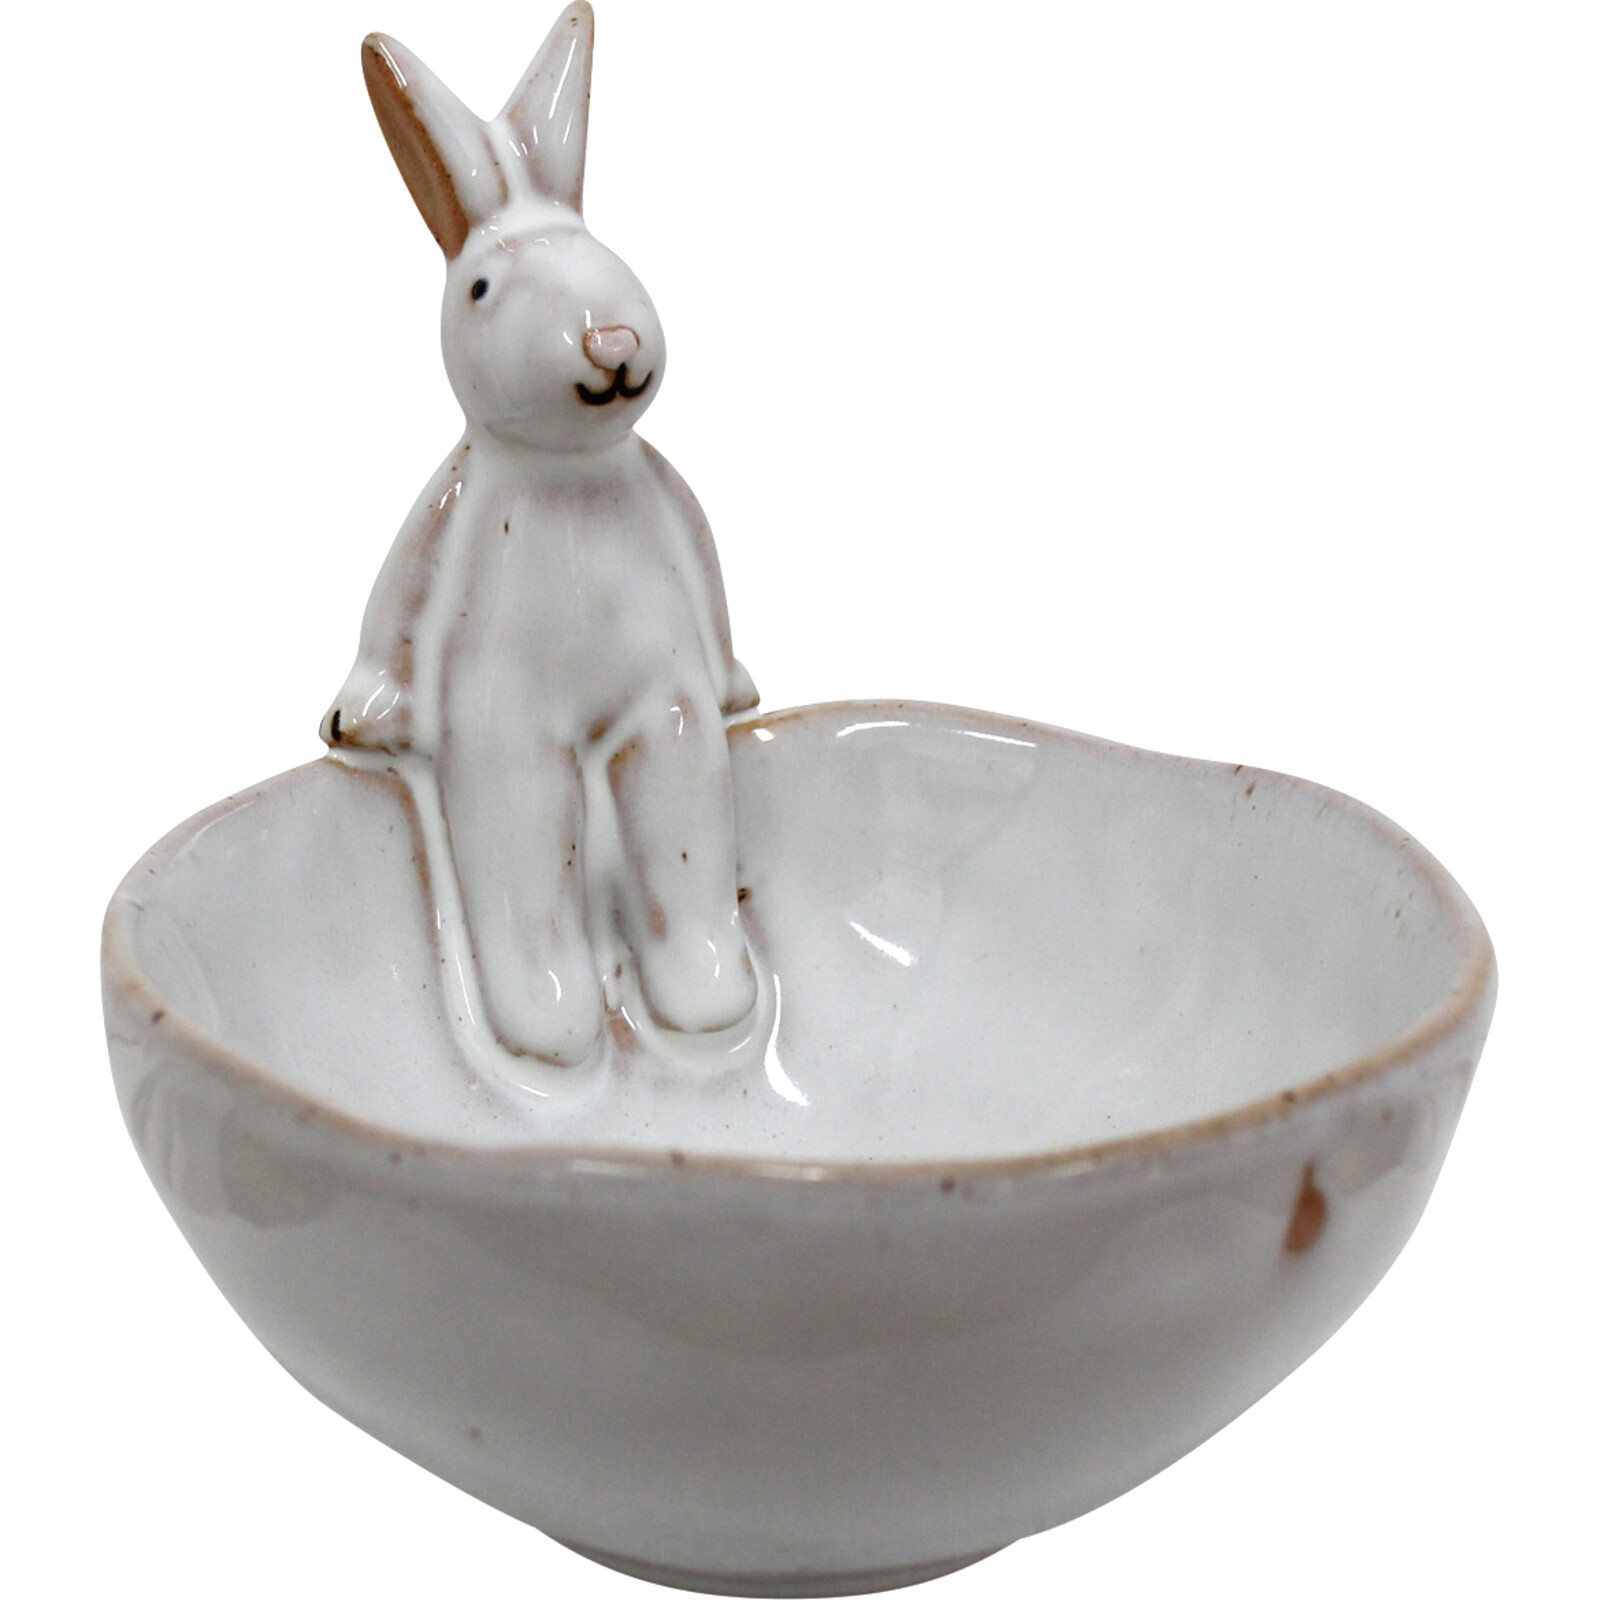 Bunny Sitting on Bowl